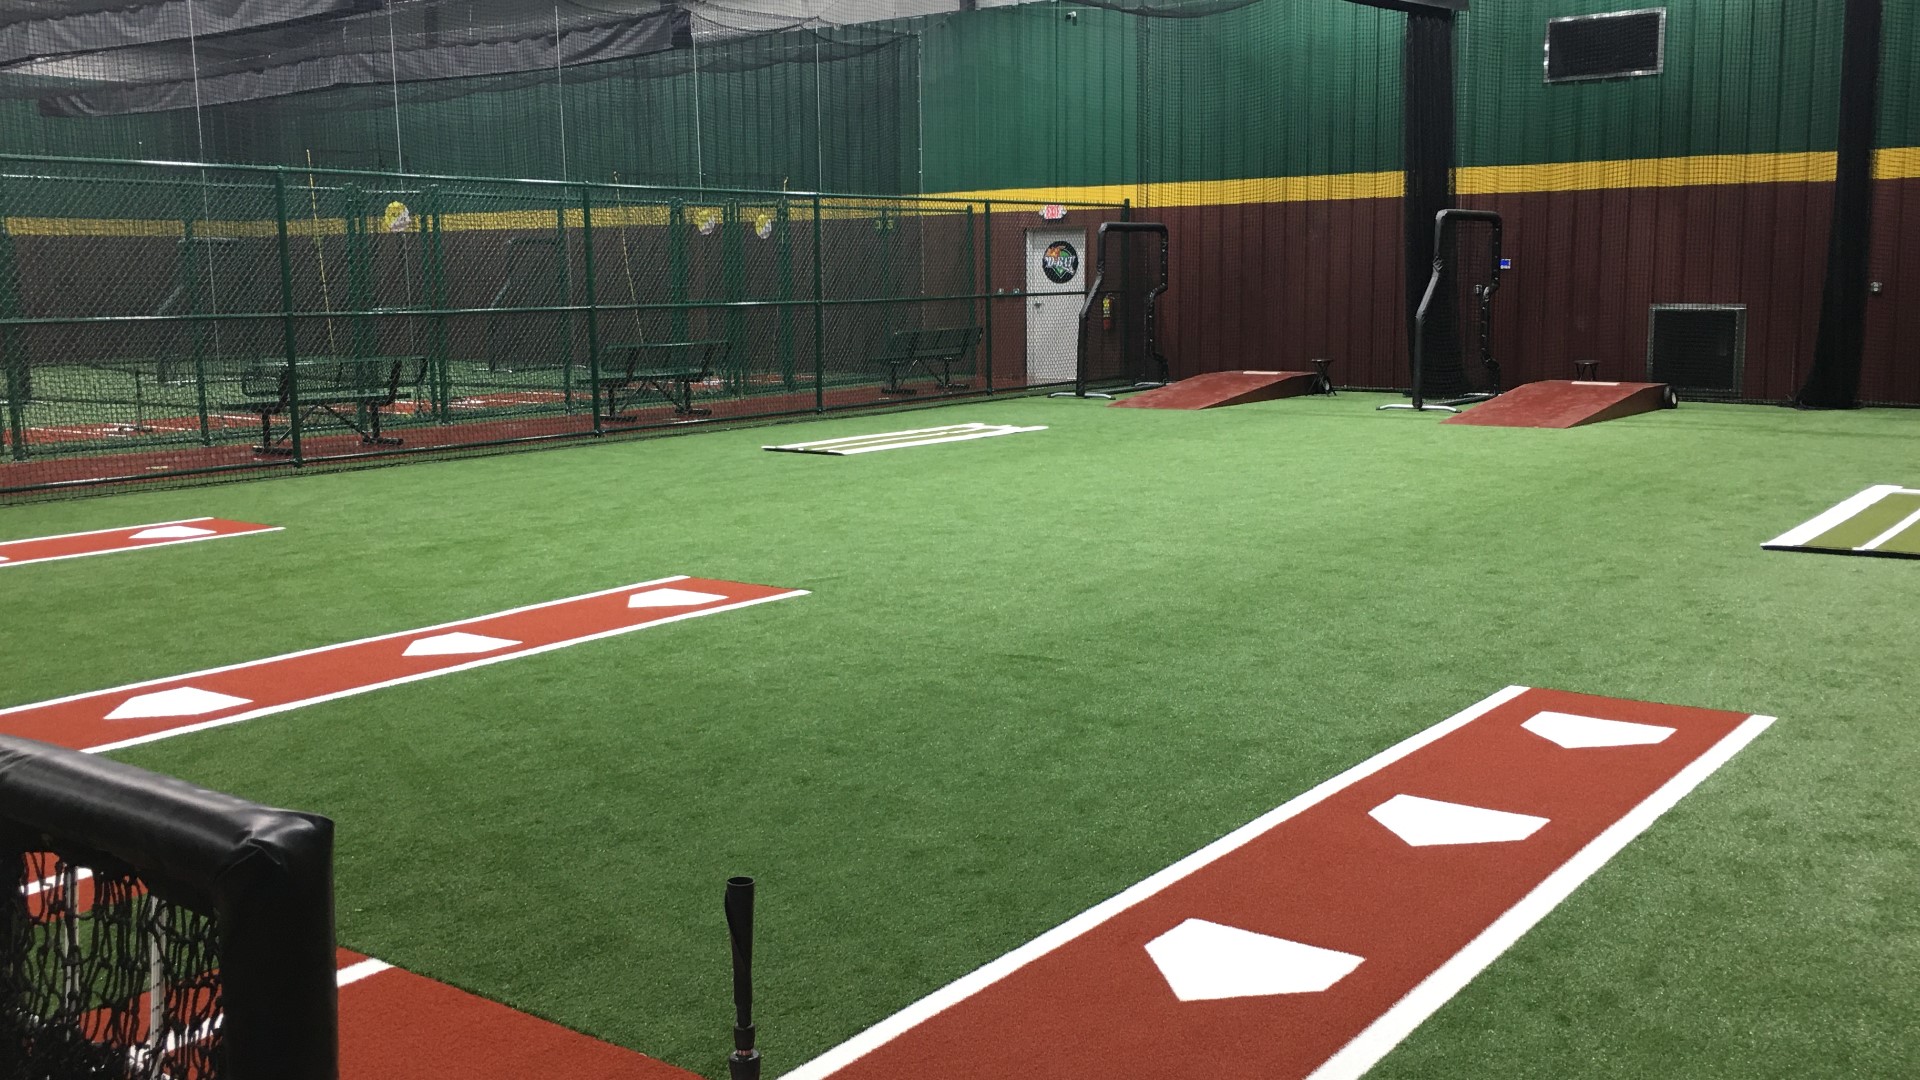 D Bat Baseball facility opens in Warner Robins